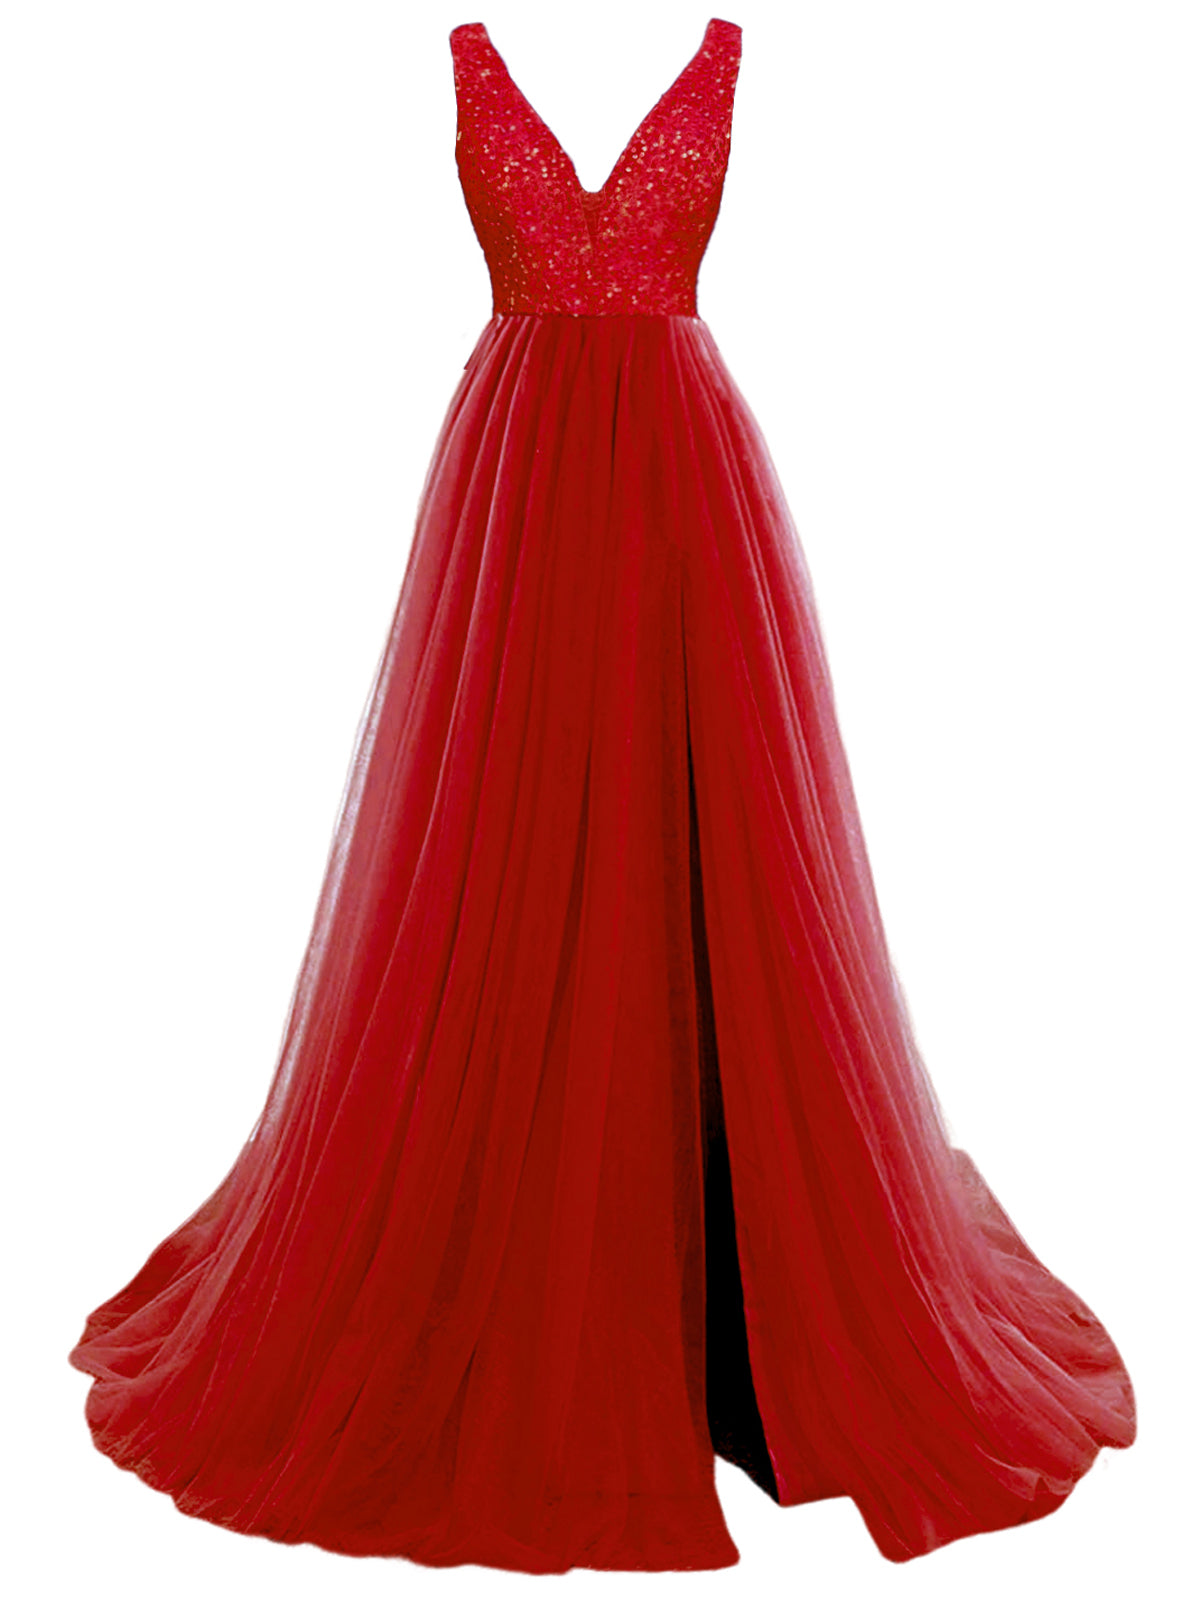 Lace A-Line Spaghetti Straps Sleeveless Prom Dress-GD102174